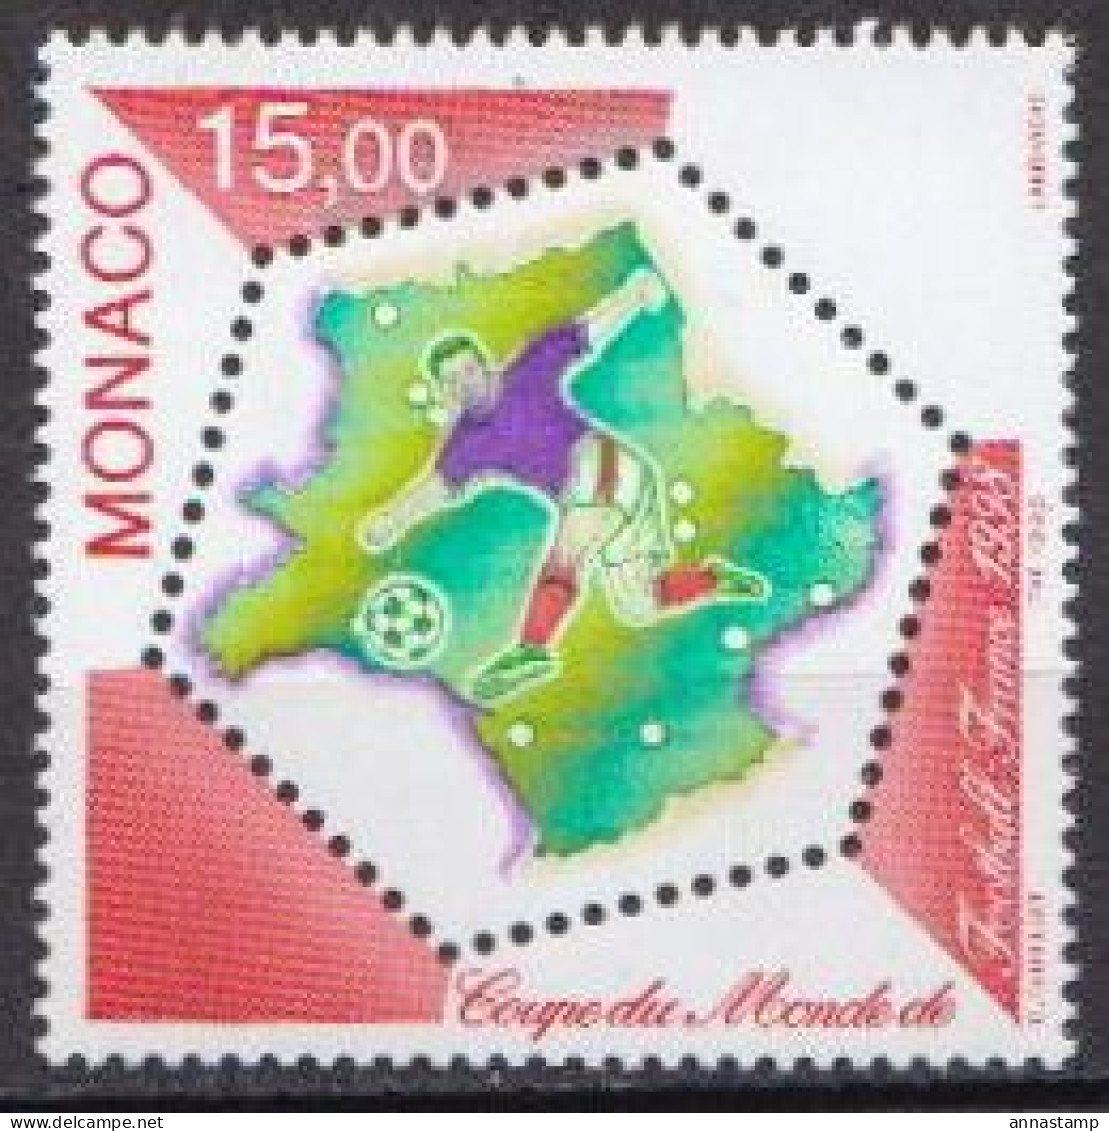 Monaco MNH Stamp - 1998 – France